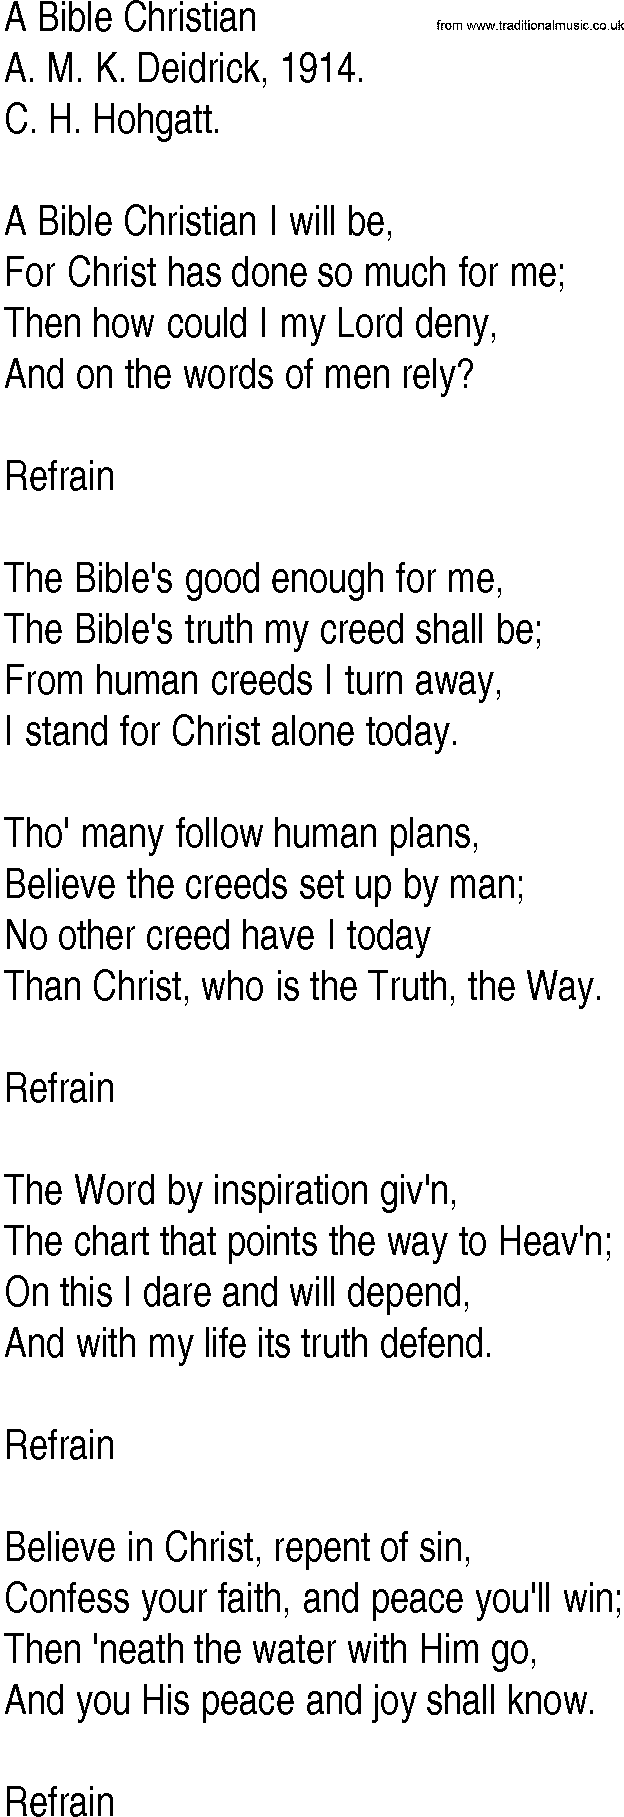 Hymn and Gospel Song: A Bible Christian by A M K Deidrick lyrics